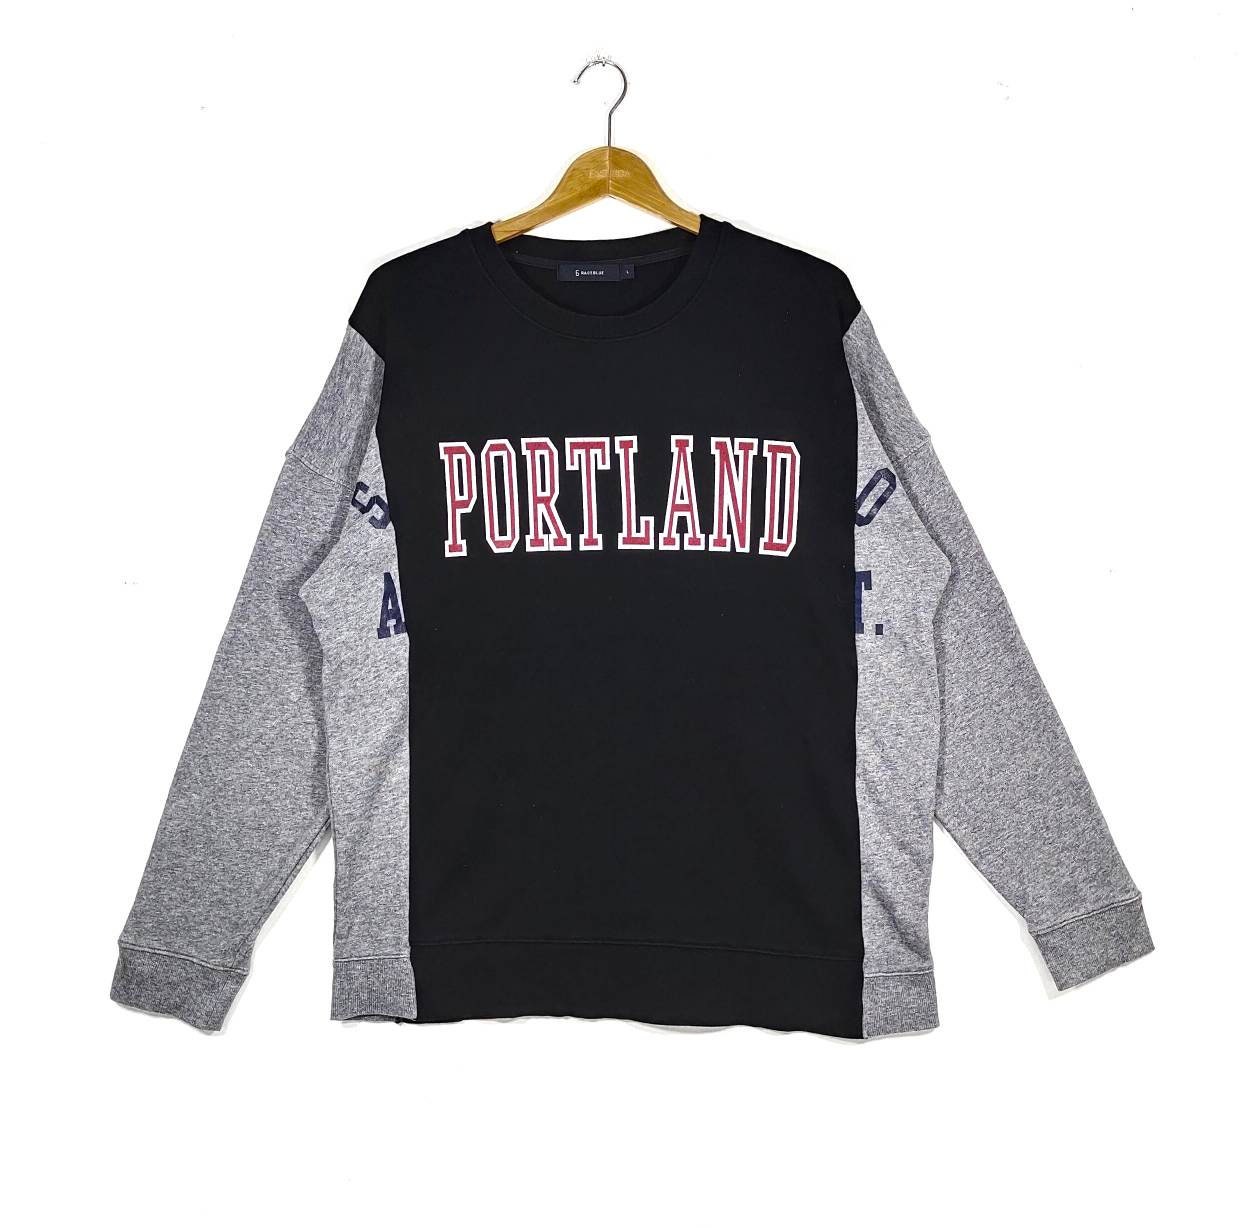 Vintage Portland Sweatshirt - Etsy